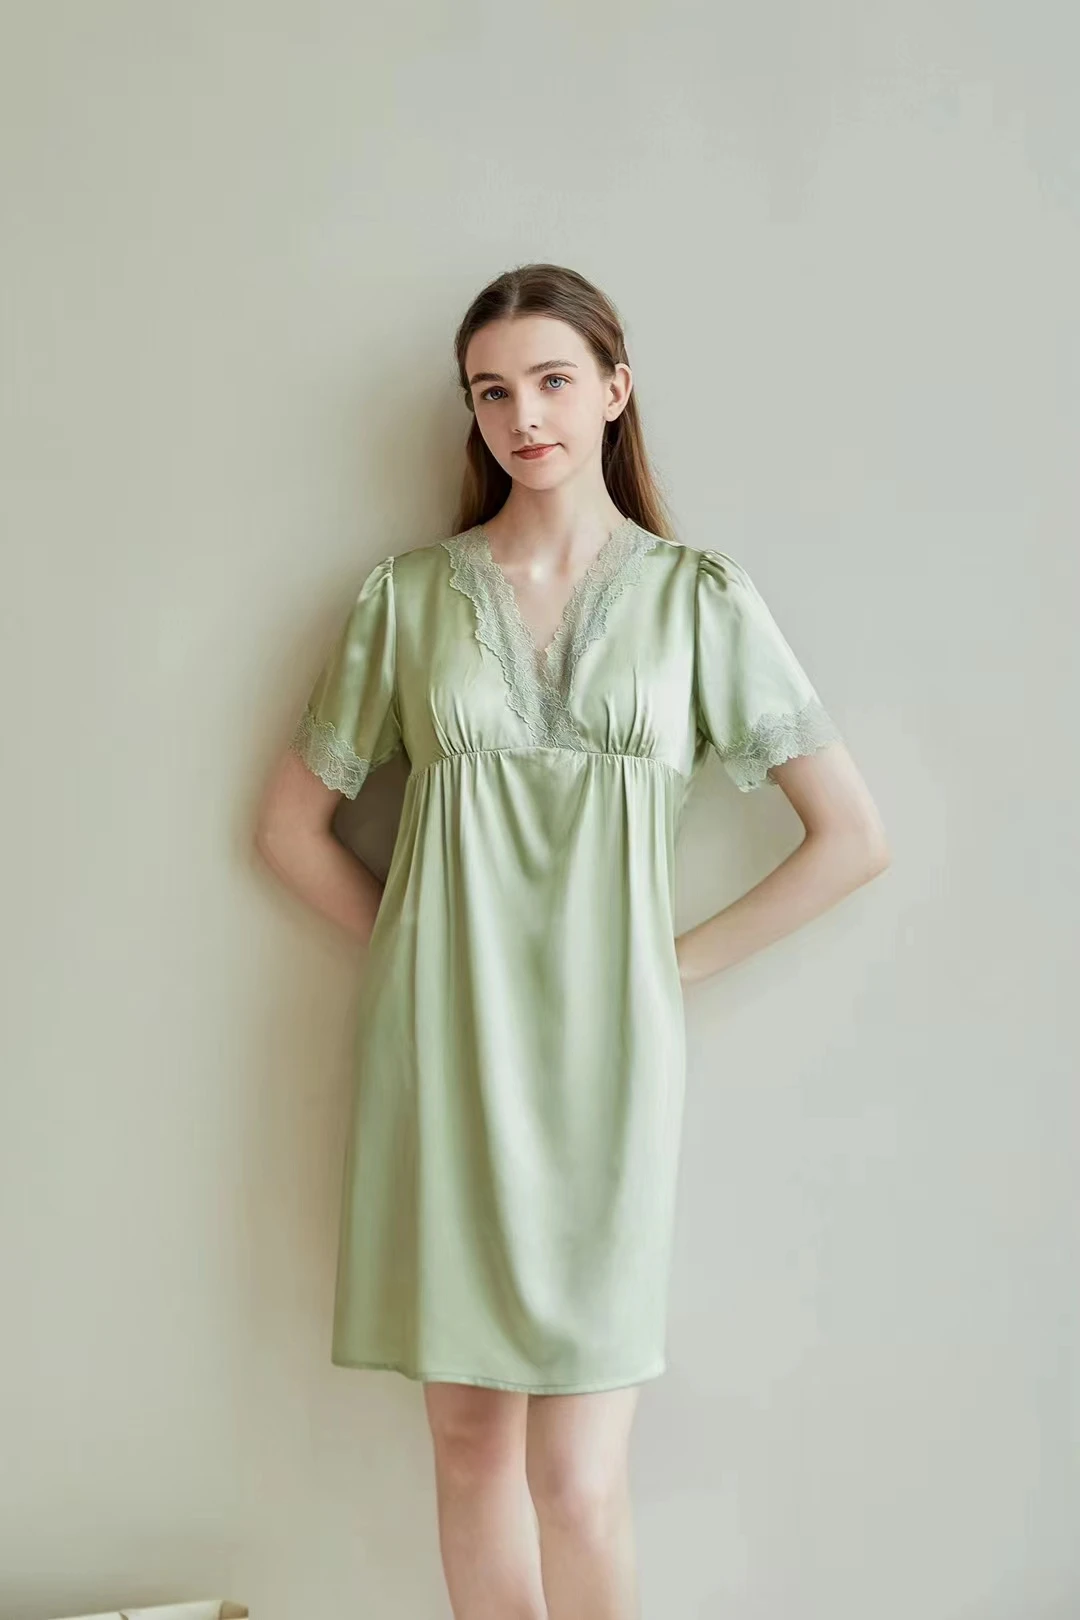 

Pure Silk Women's Nightdress Sleepwear Summer Short Sleeve Night Dress Nightgown with Bra 100% Mulberry Silk Sleepdress Lingerie